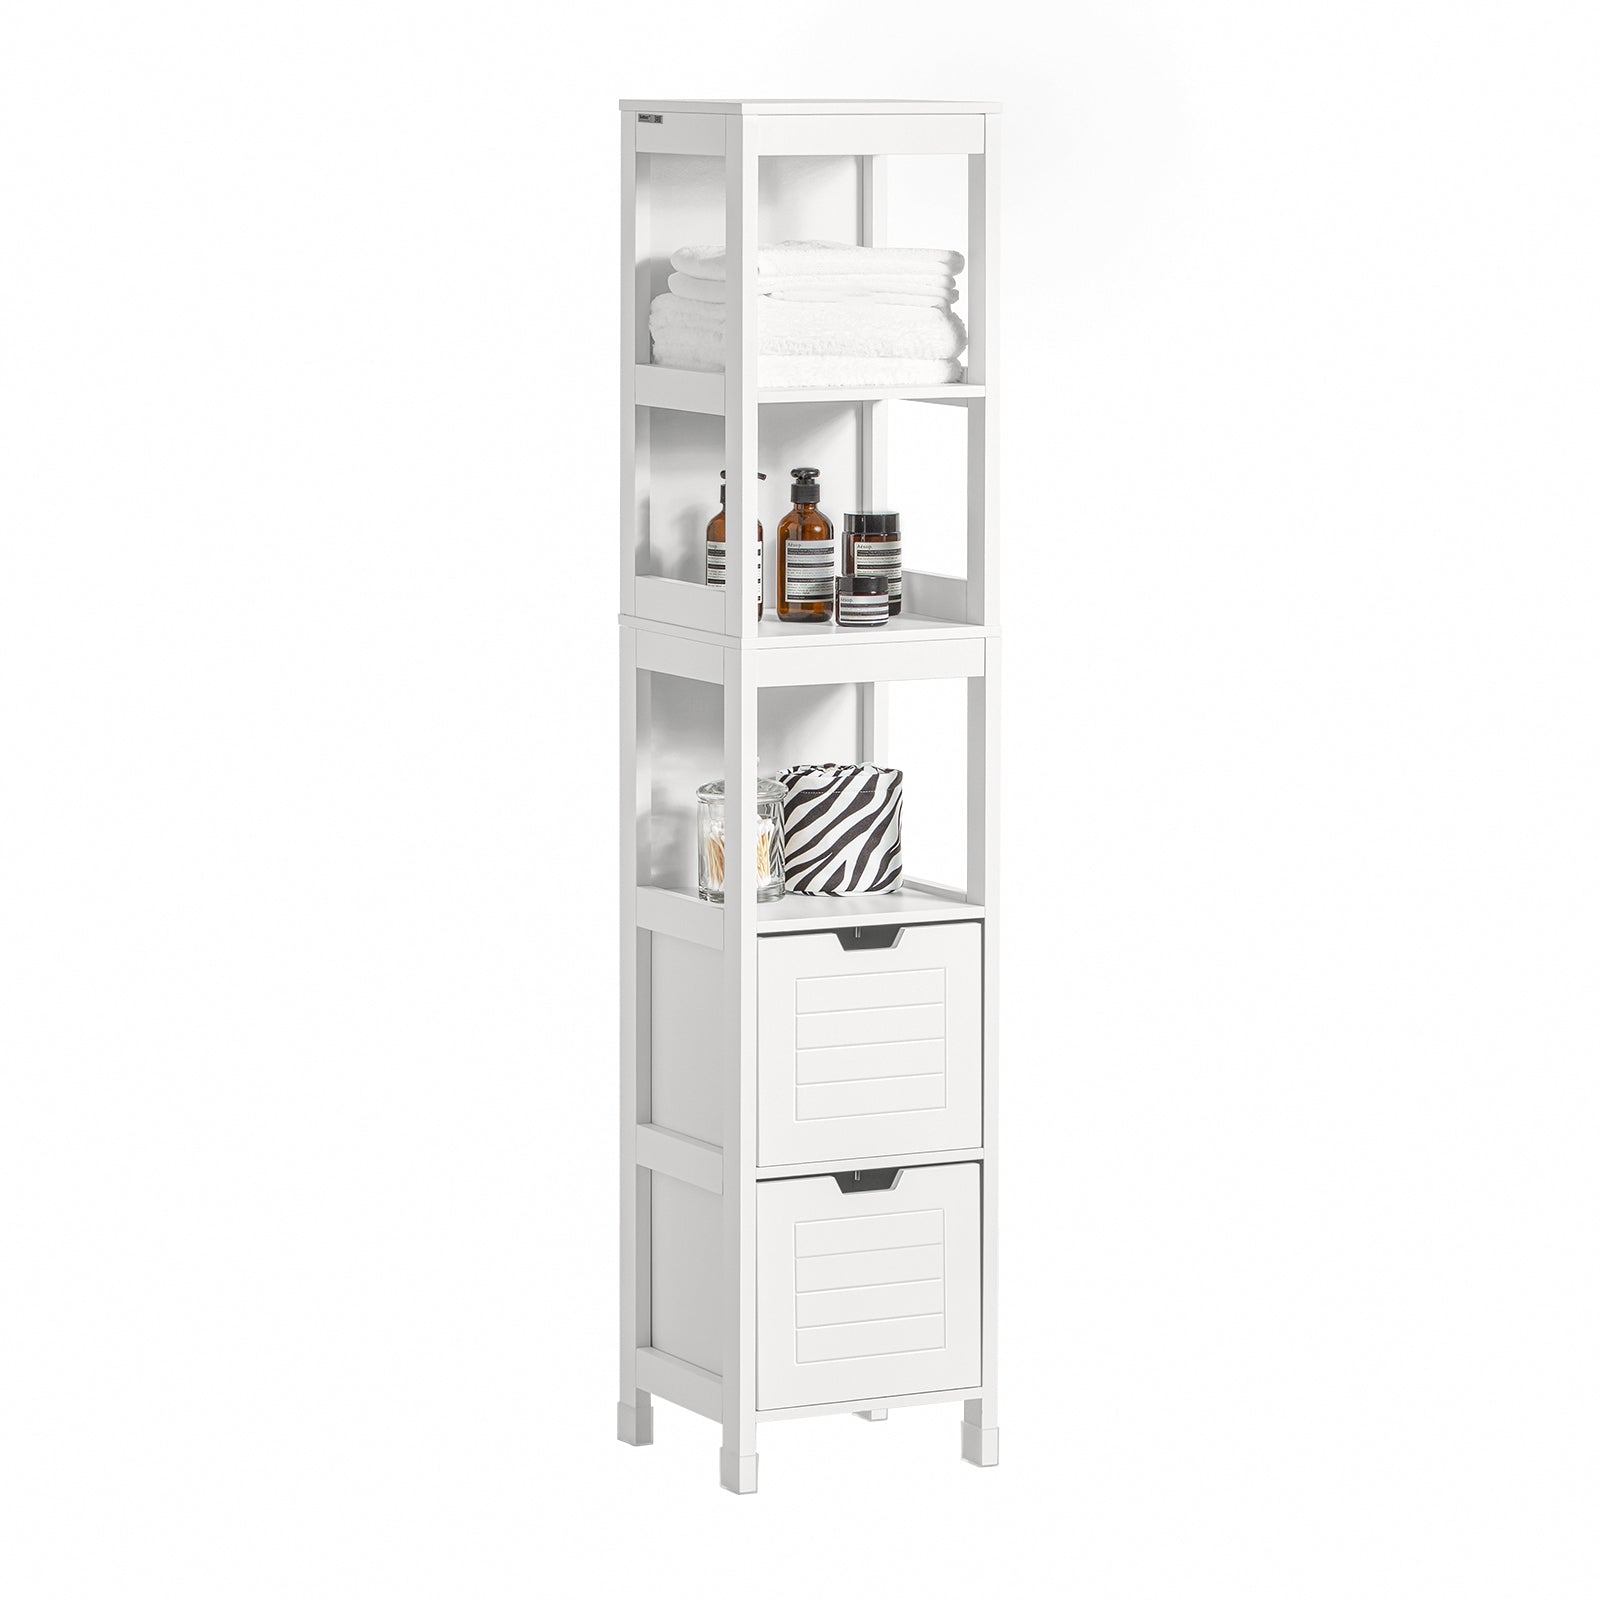 Haotian Free Standing Tall Bathroom Storage Cabinet, FRG236-W